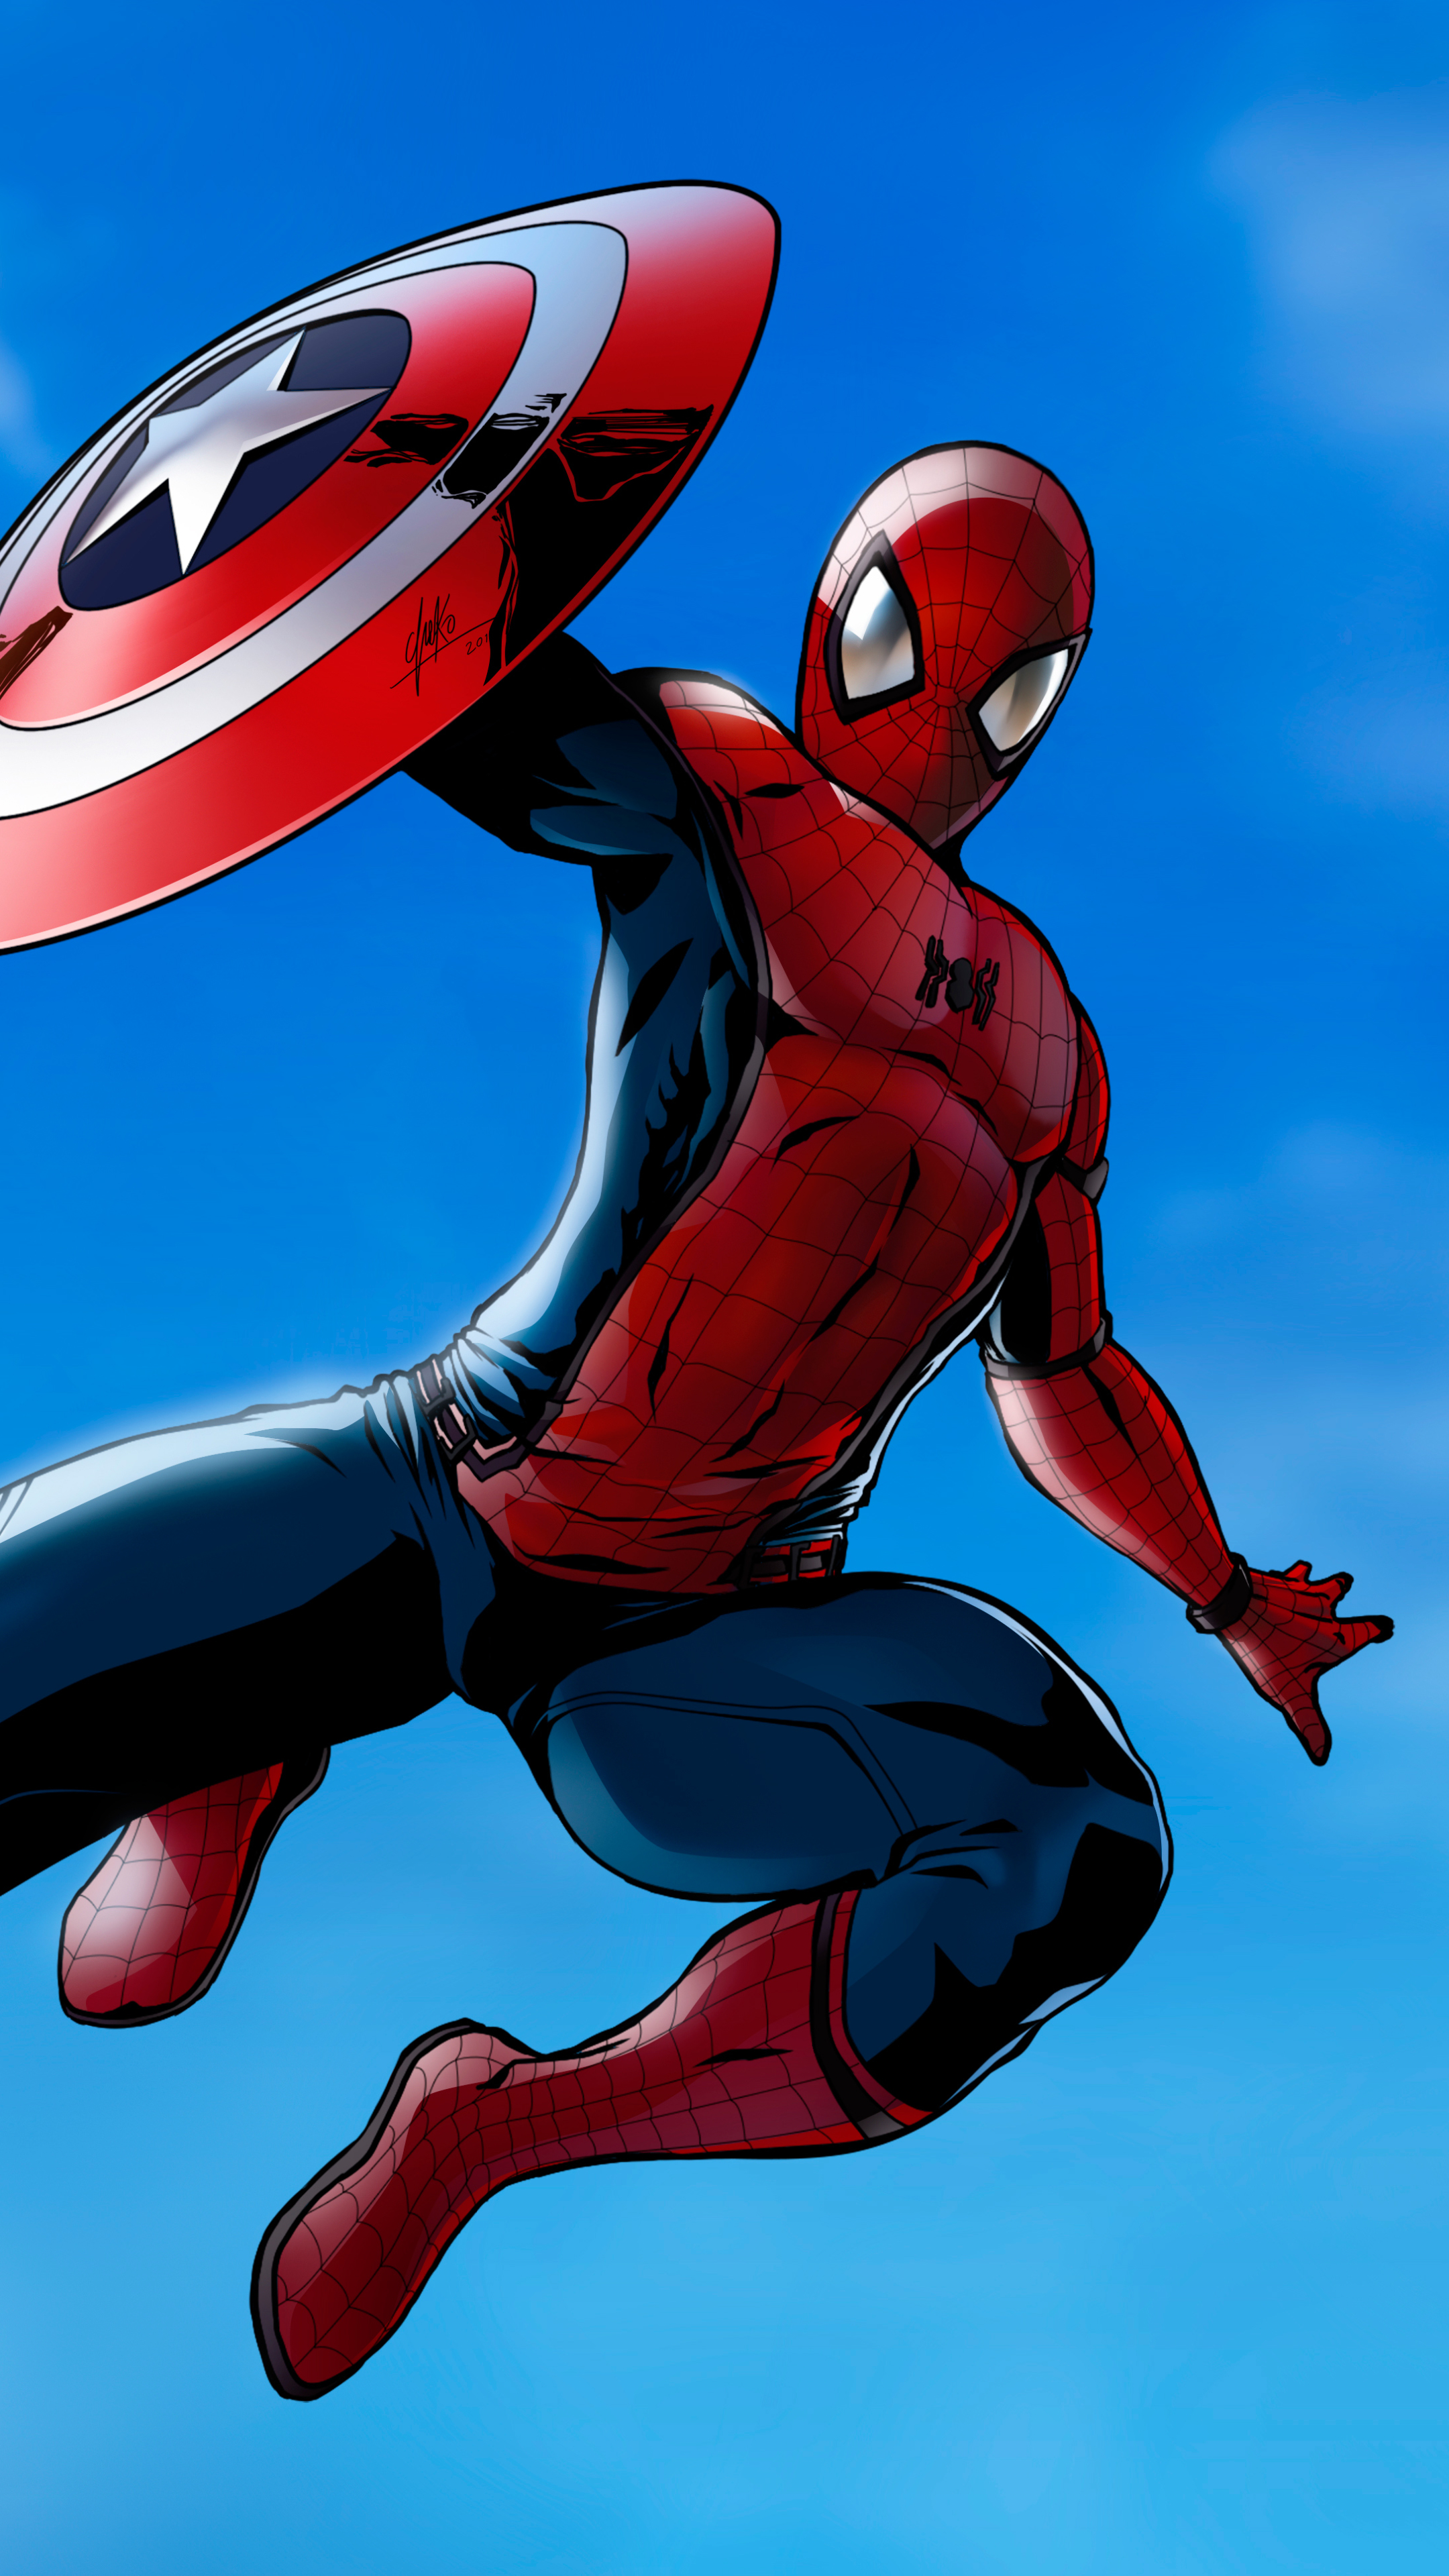 Handy-Wallpaper Captain America, Filme, Spider Man, The First Avenger: Civil War kostenlos herunterladen.